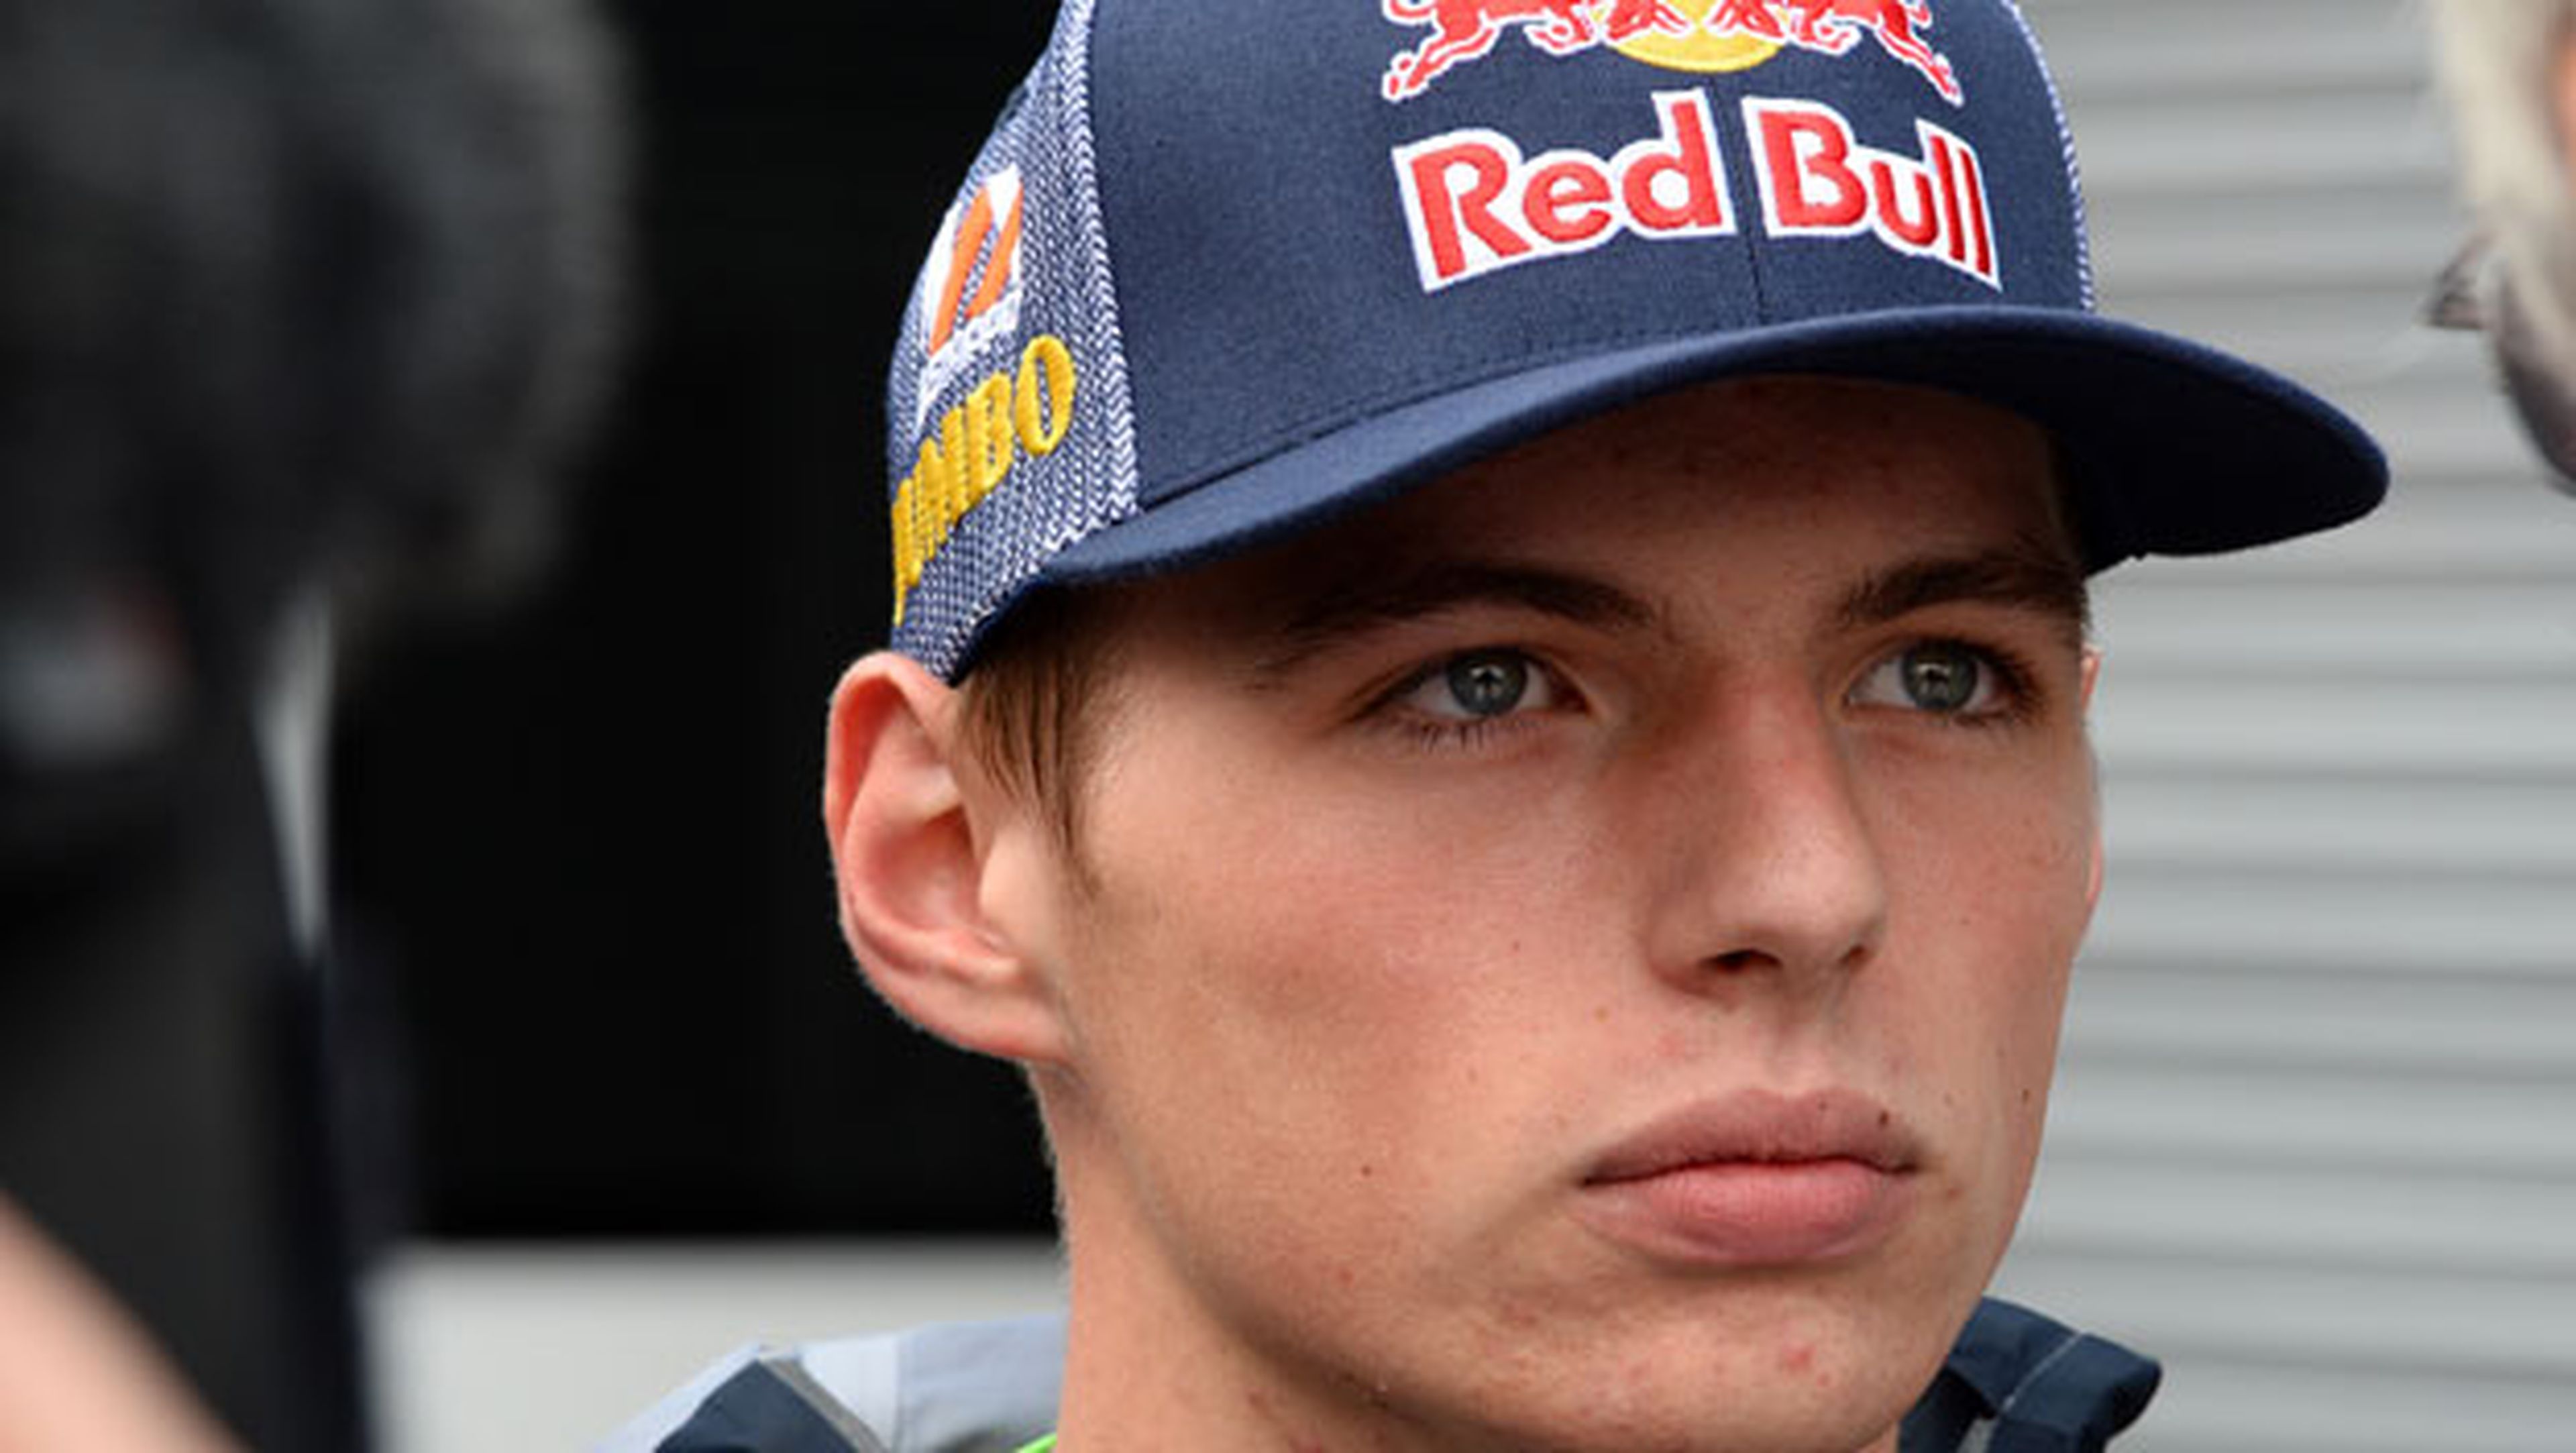 Verstappen empezará el Mundial 2015 sin carné de conducir